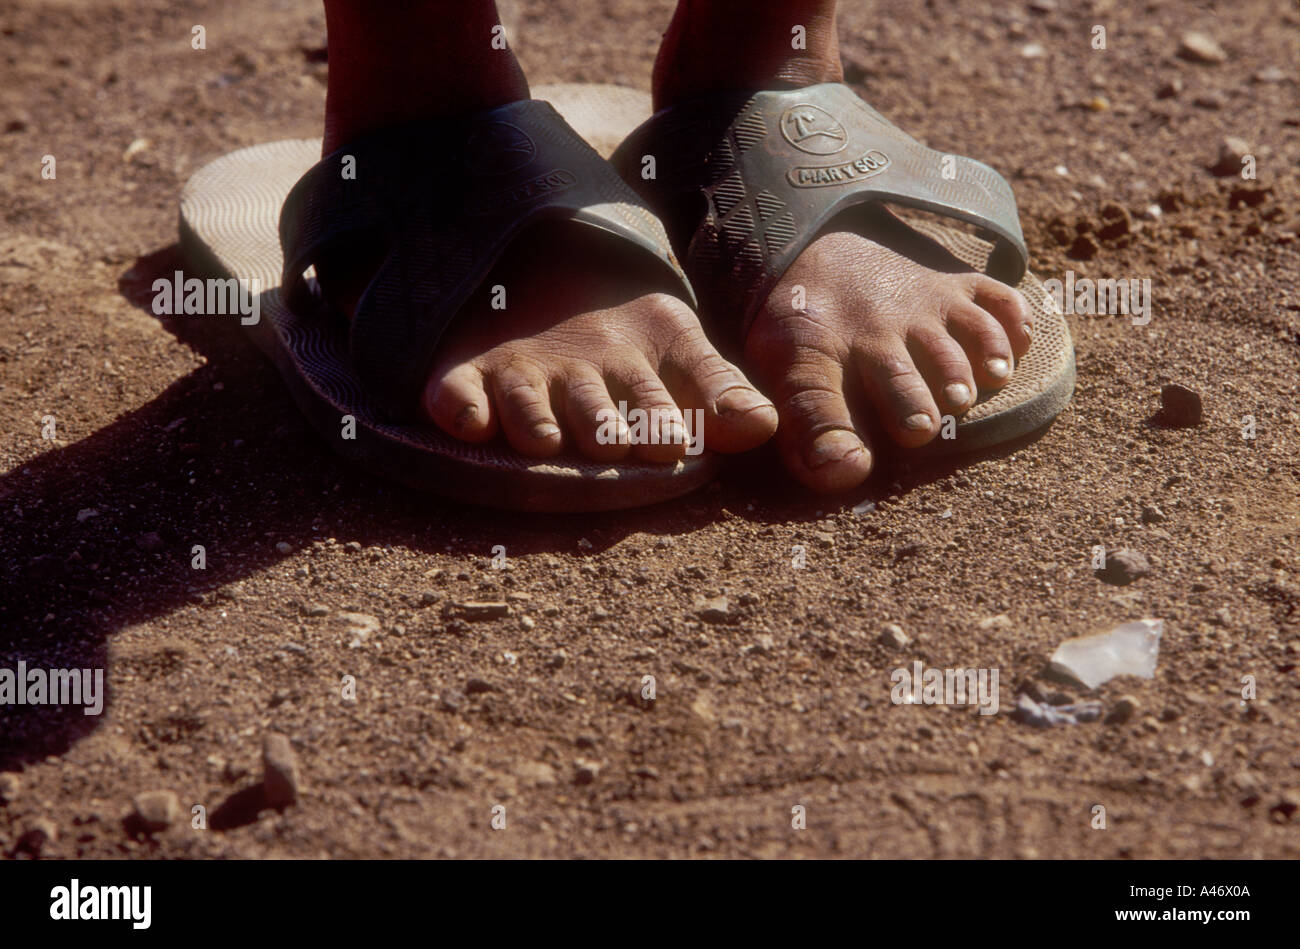 A child's feet in sandals that are too big, Villa Nueva slum, Honduras  Stock Photo - Alamy